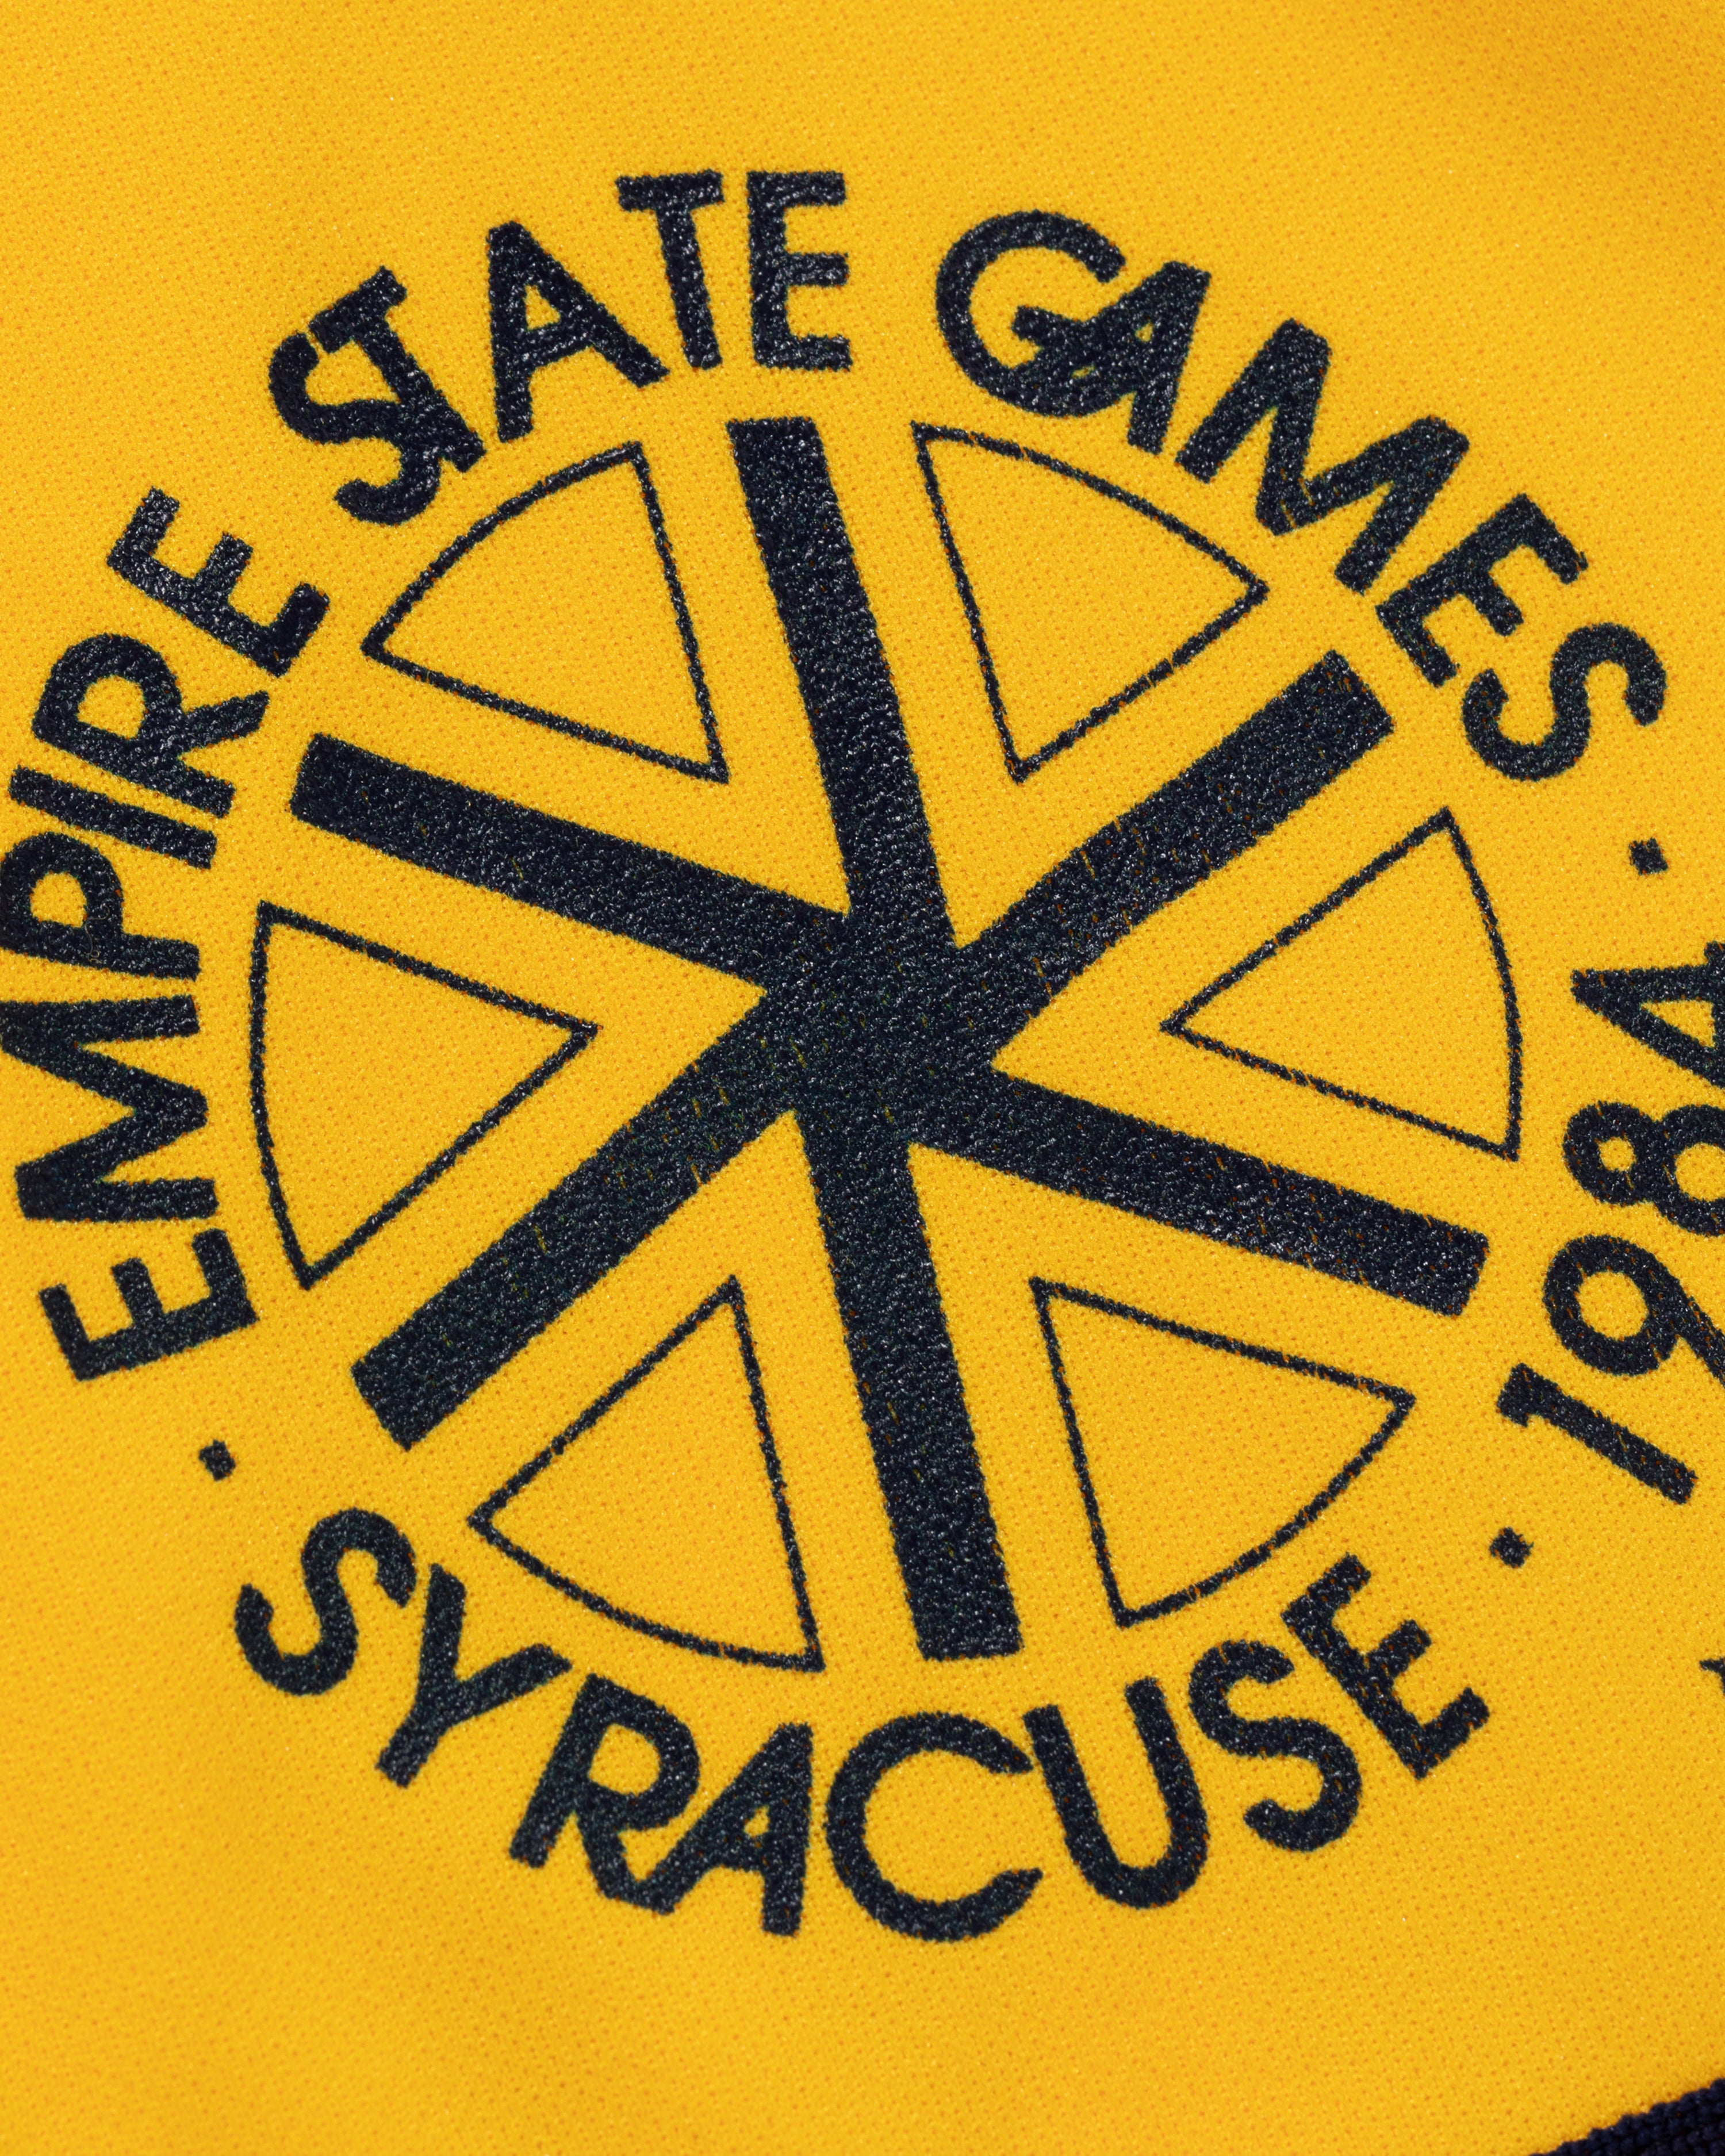 Vintage Empire State Games Jacket